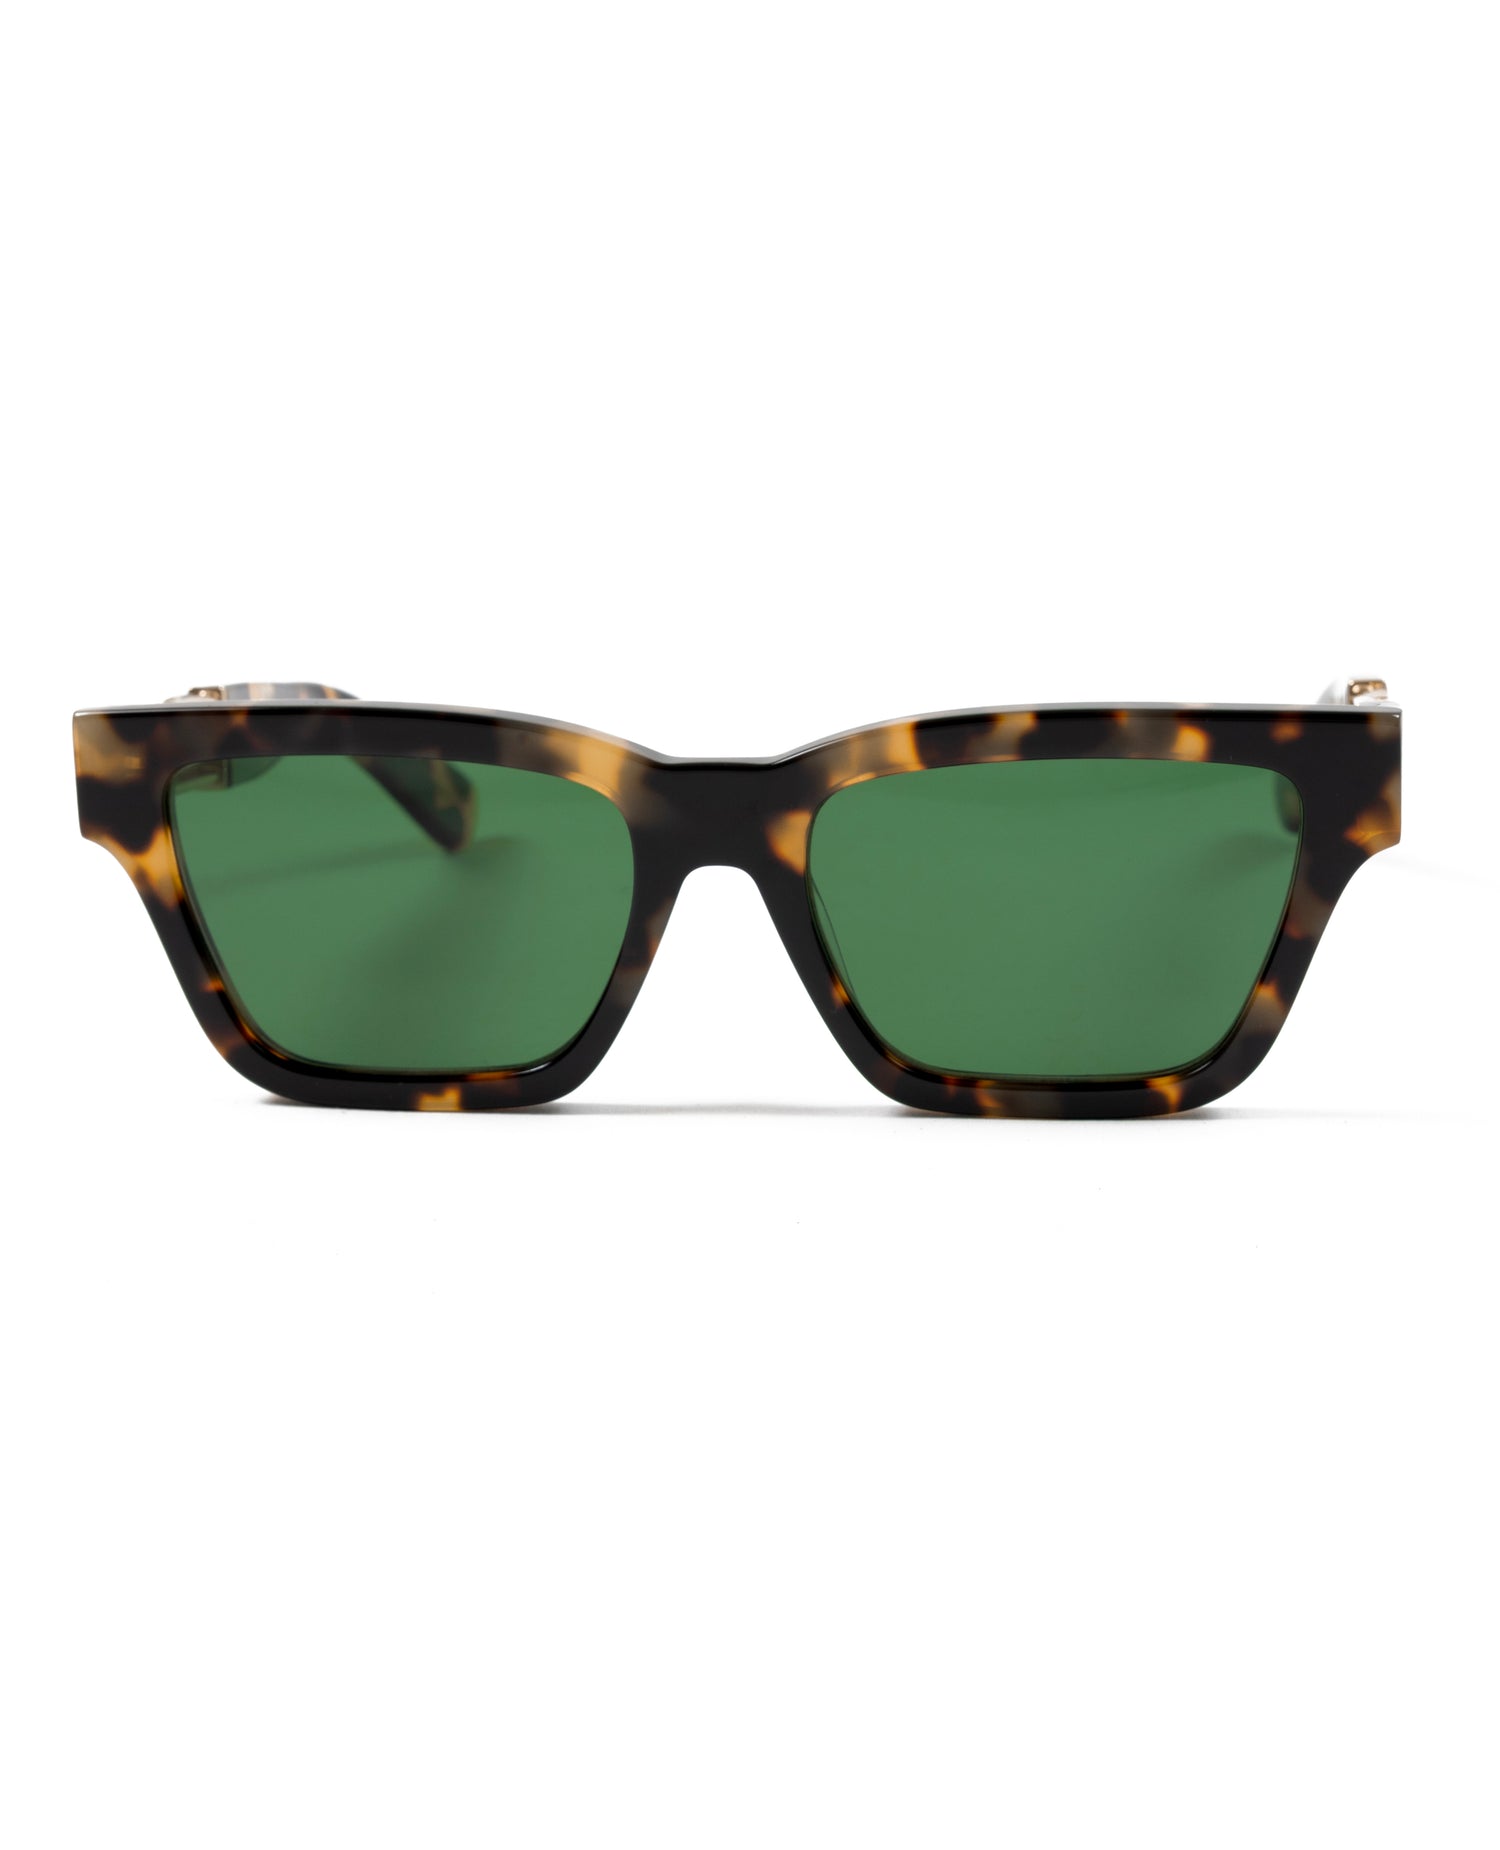 Patta Gold Stamp Sunglasses (Tortoise)